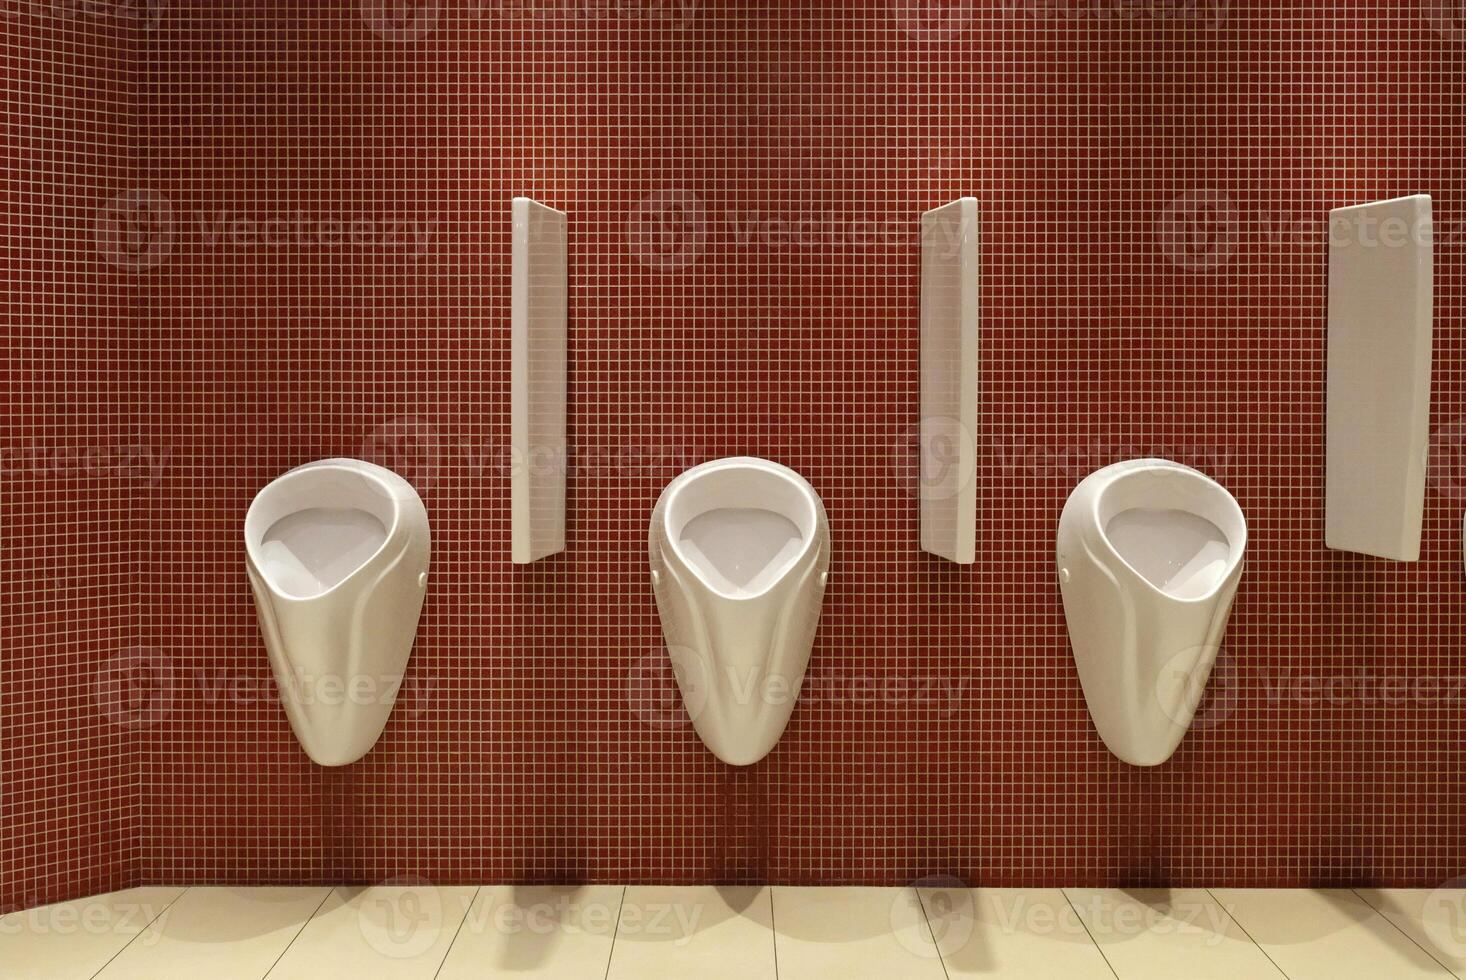 Urinals in a men's restroom photo